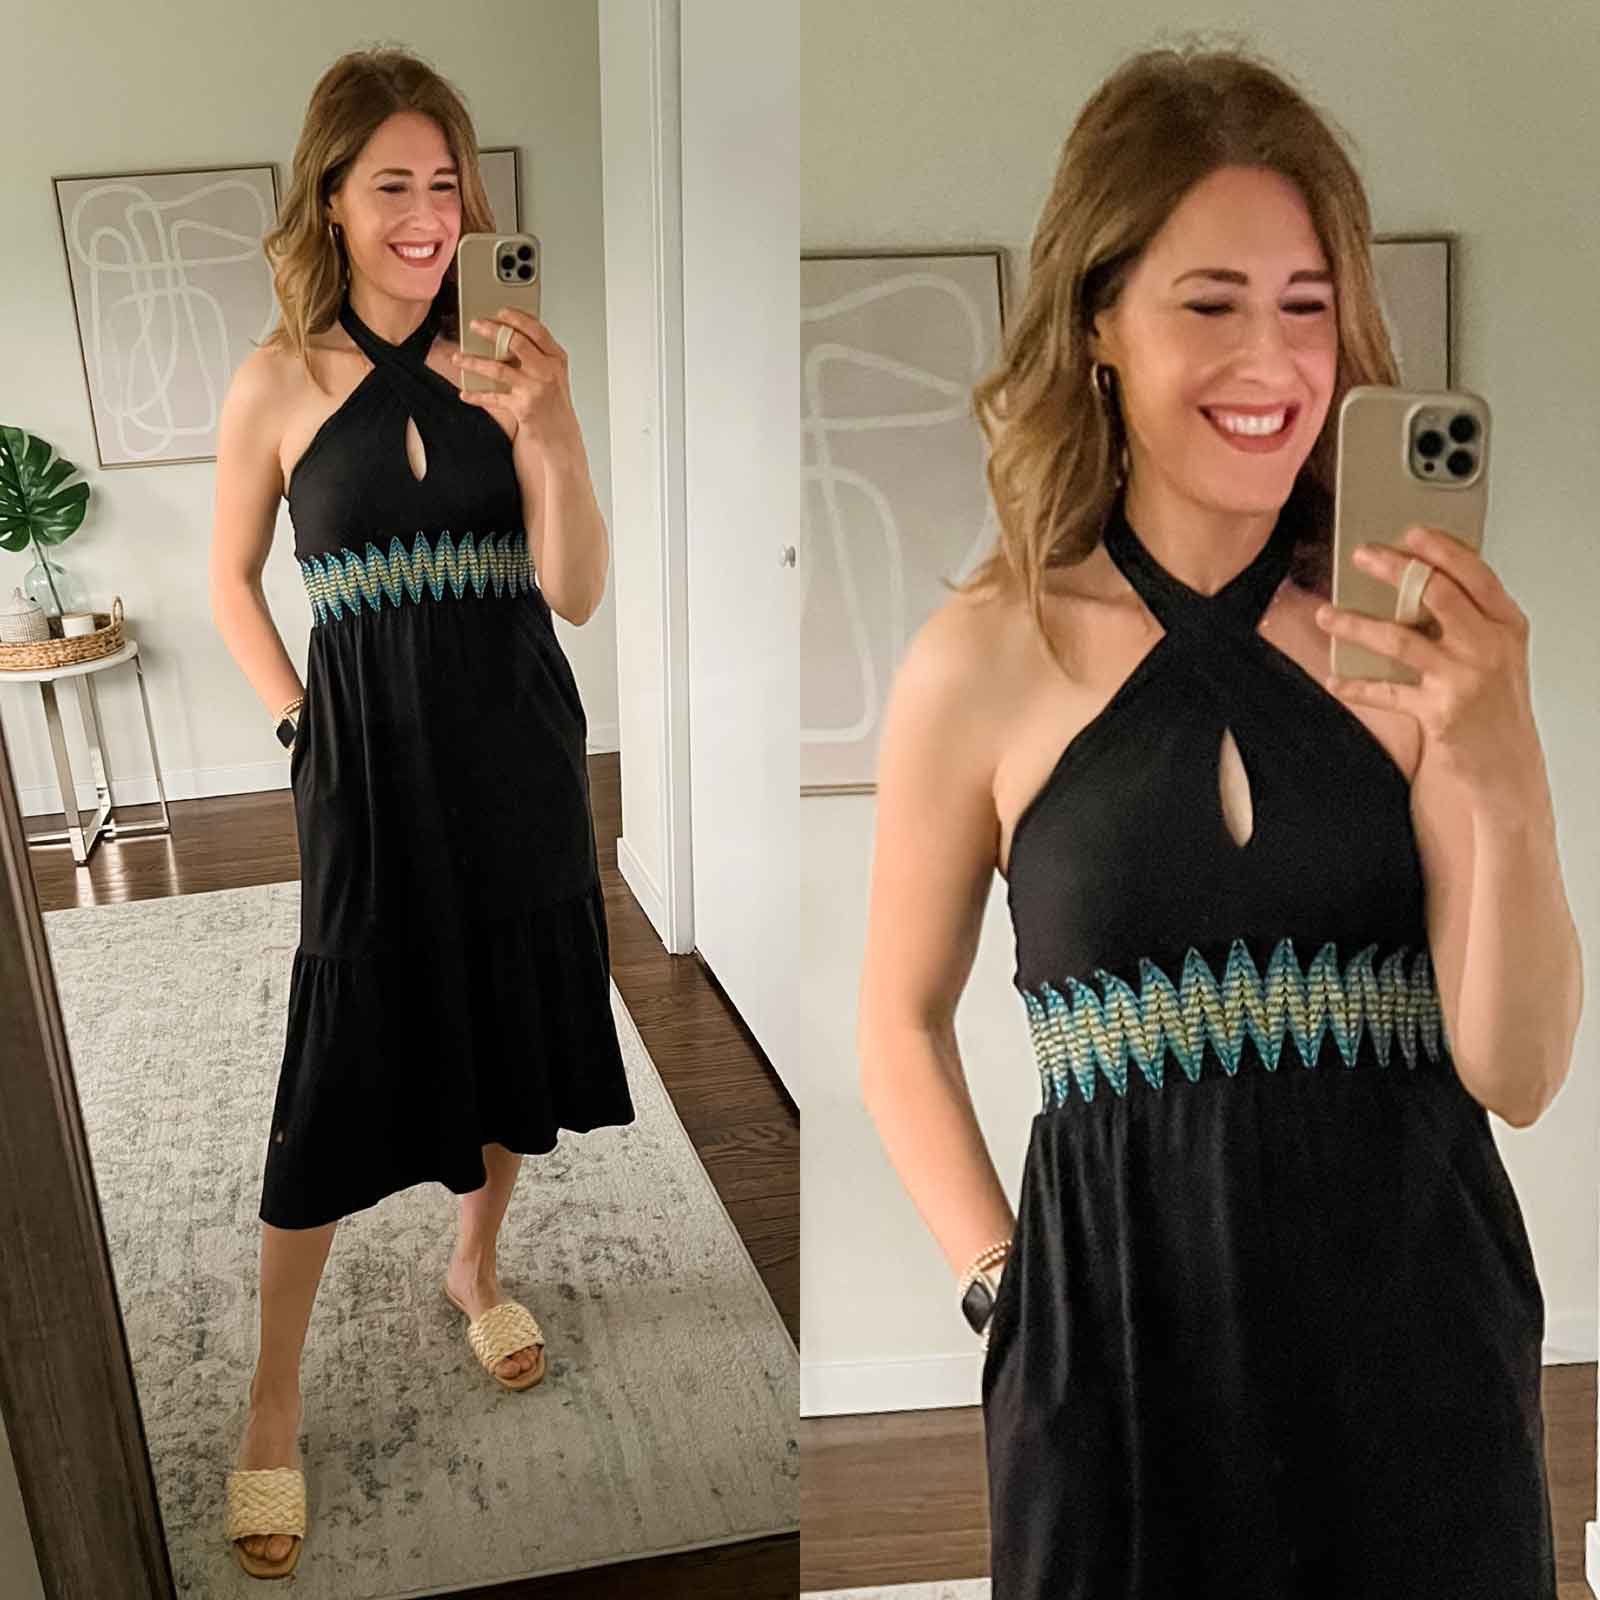 Sofia Vergara dresses at Walmart under $40